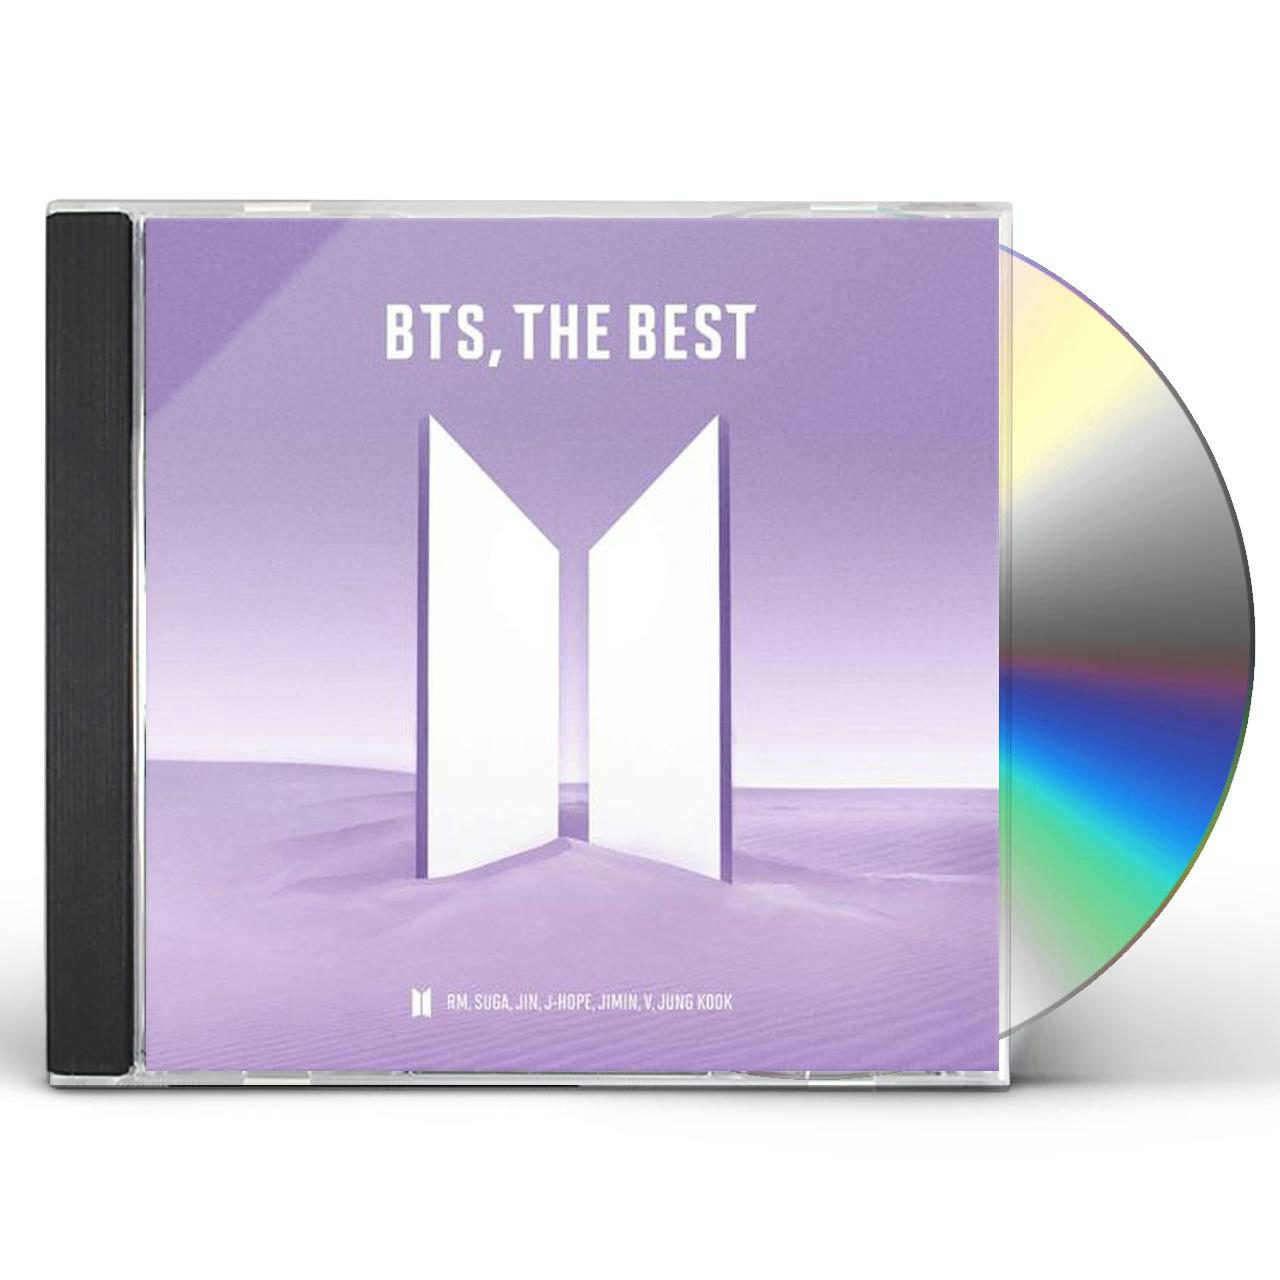 BTS THE BEST CD